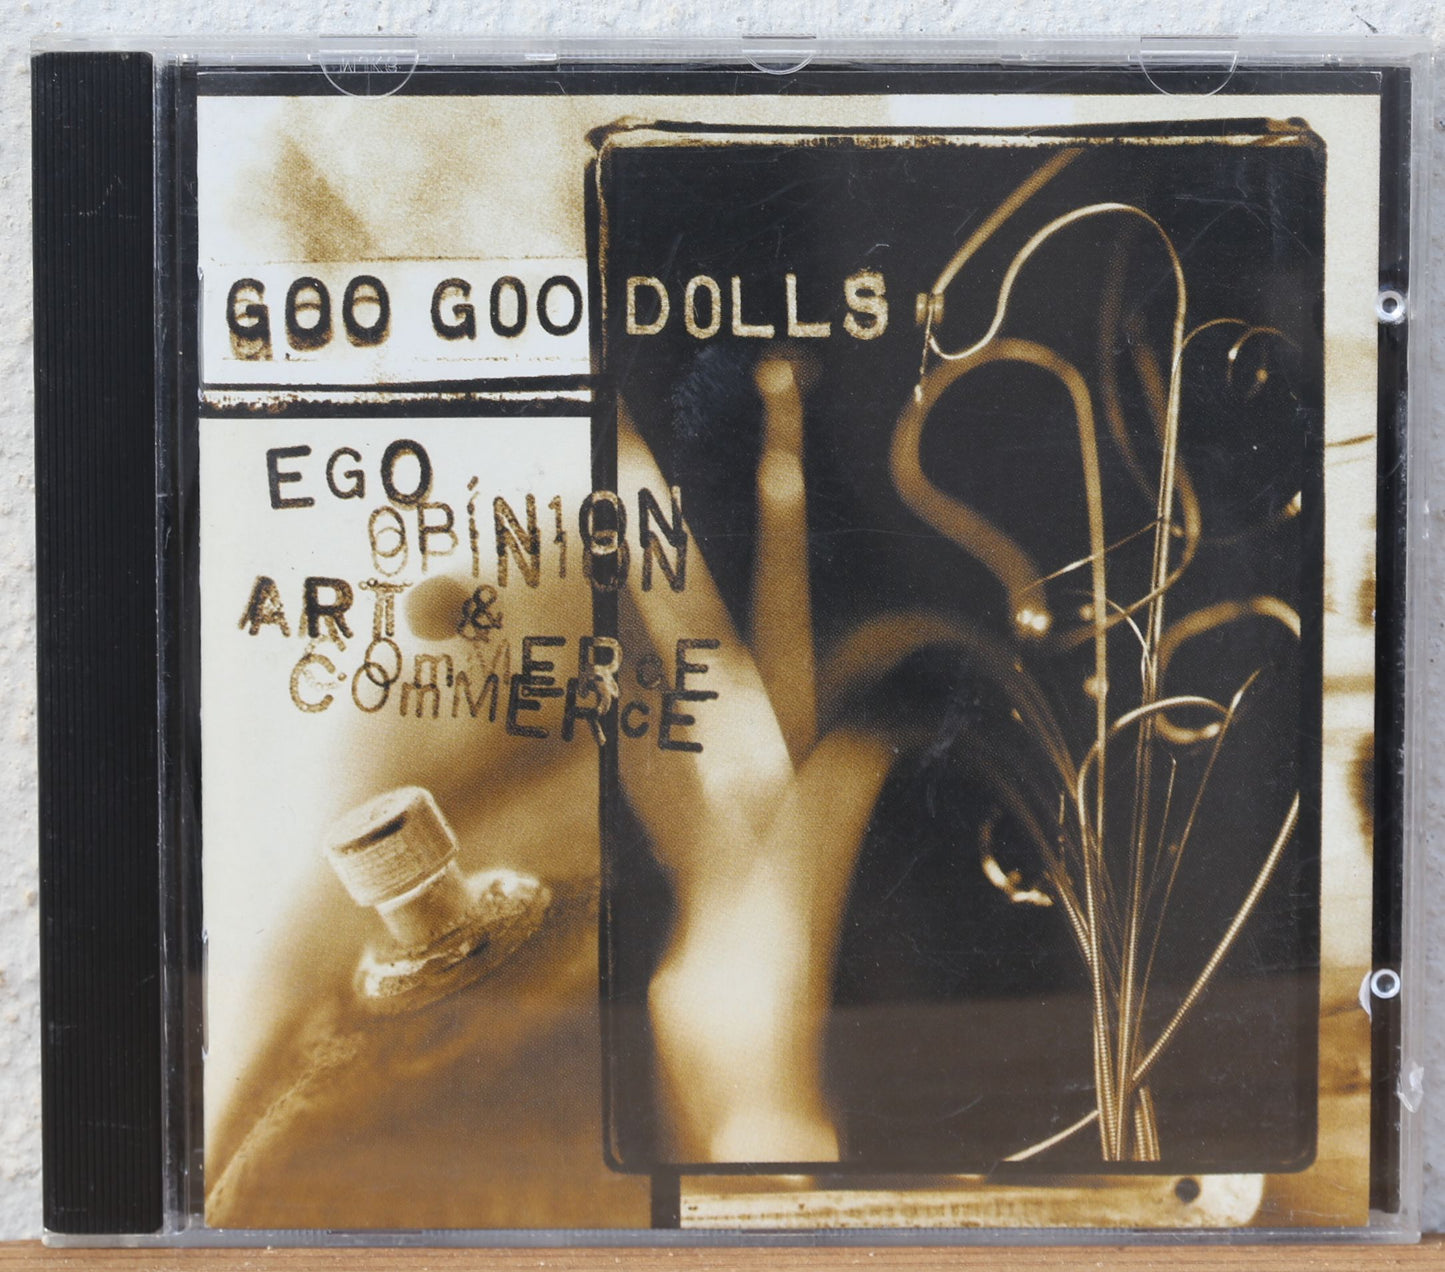 Goo Goo Dolls - Ego, Opinion, Art & Commerce (cd)